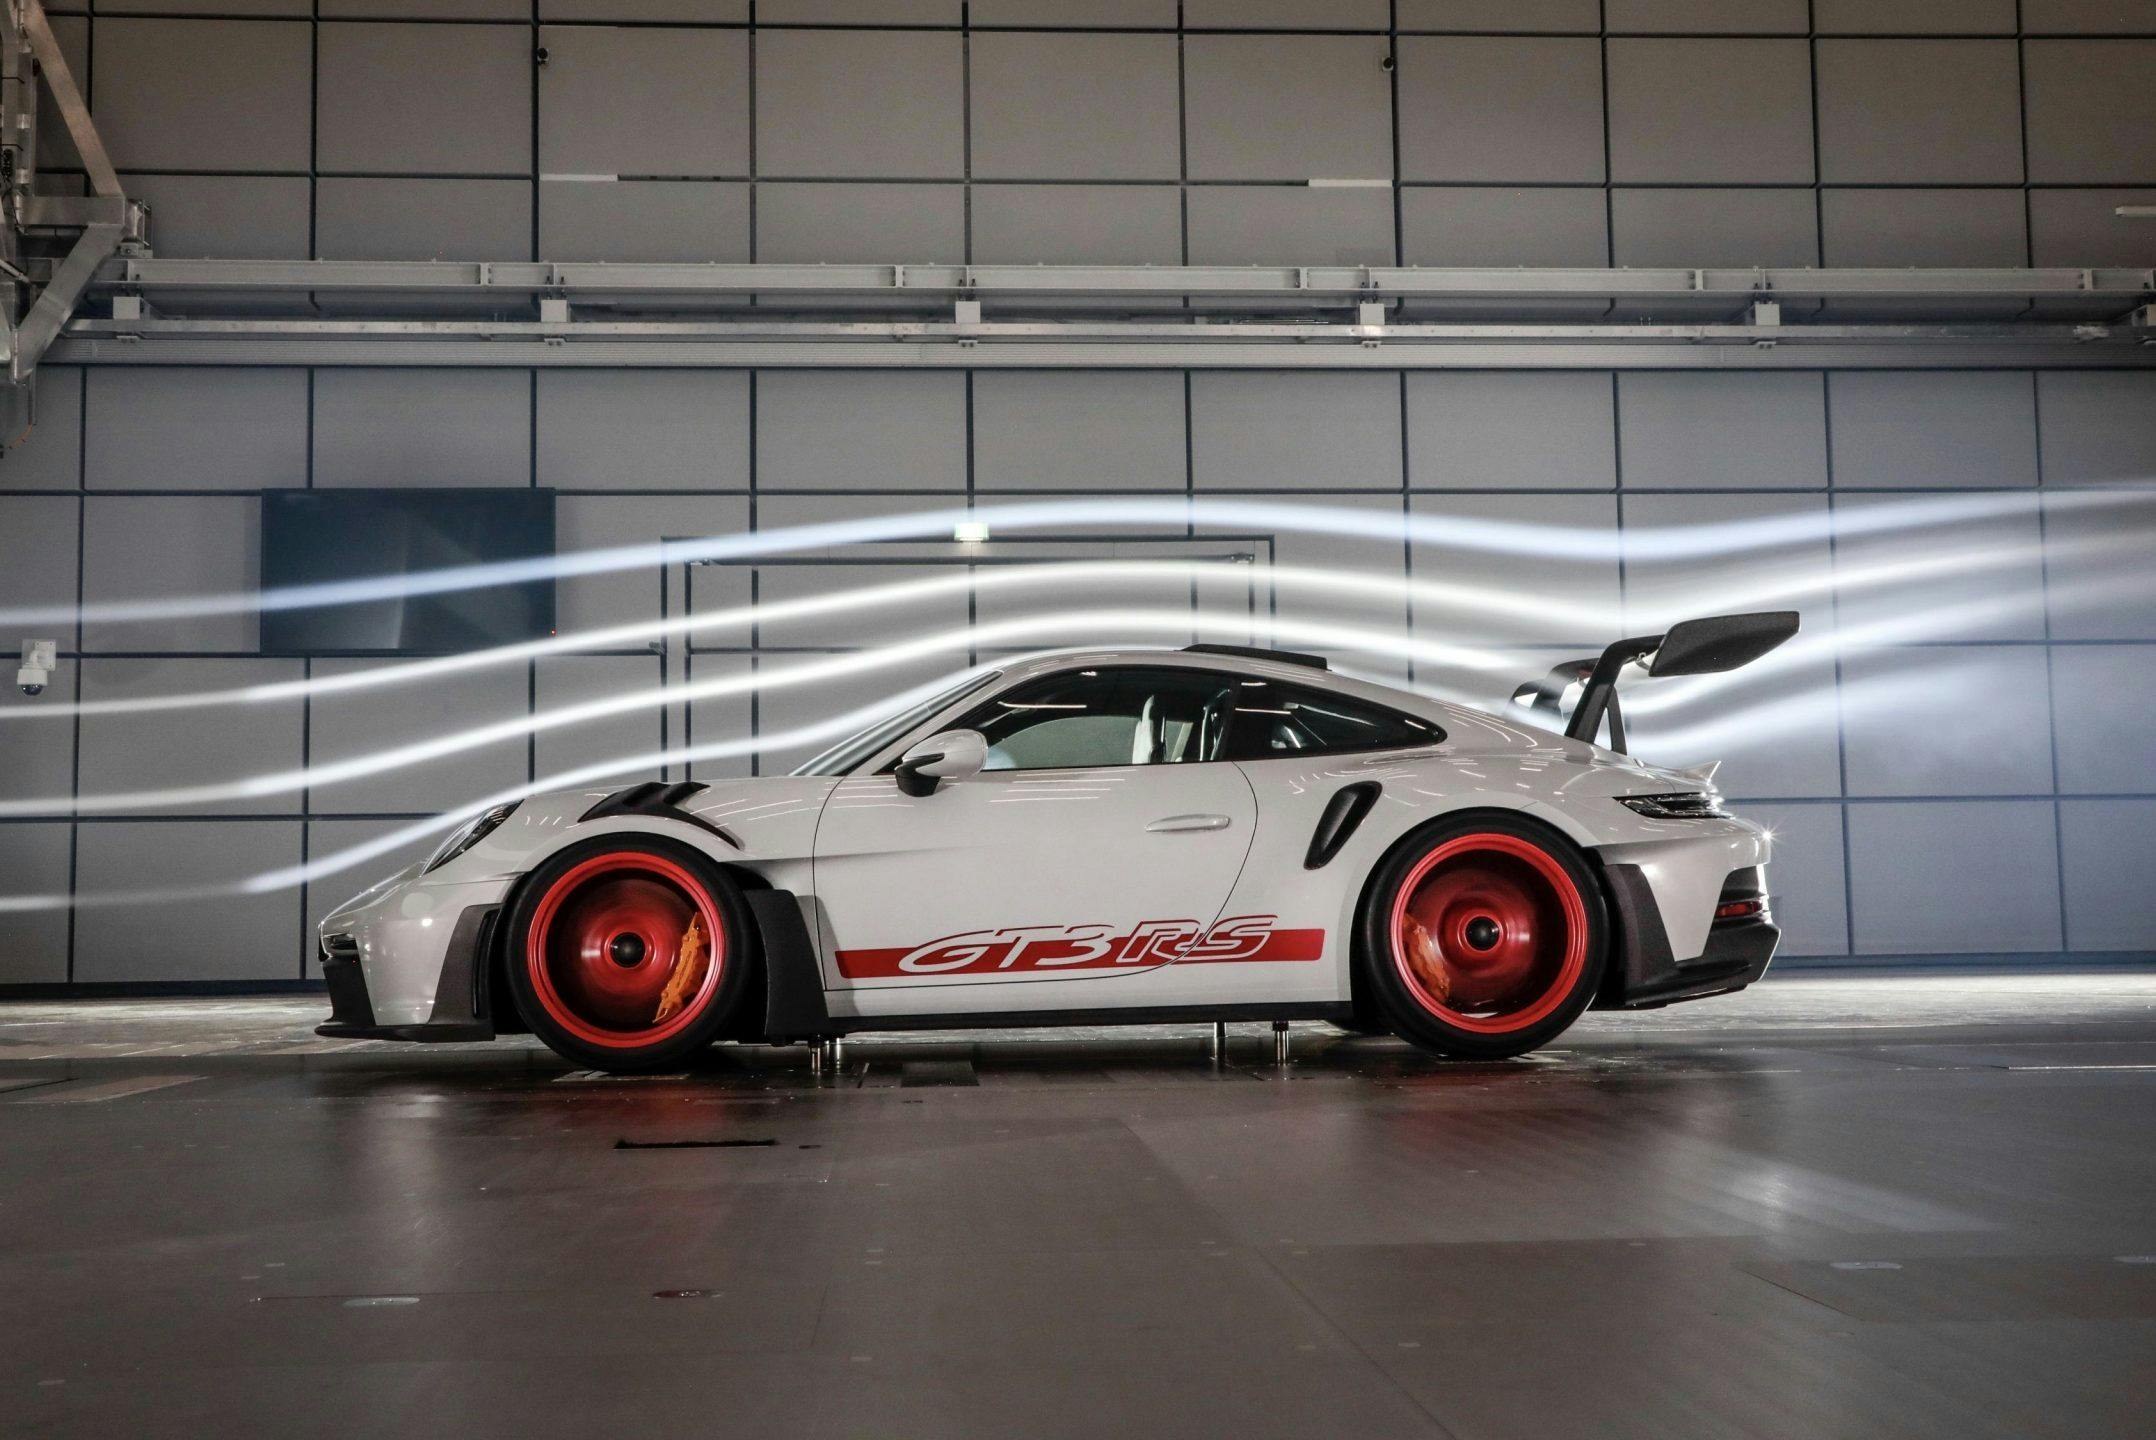 Porsche 911 GT3 RS - Porsche USA